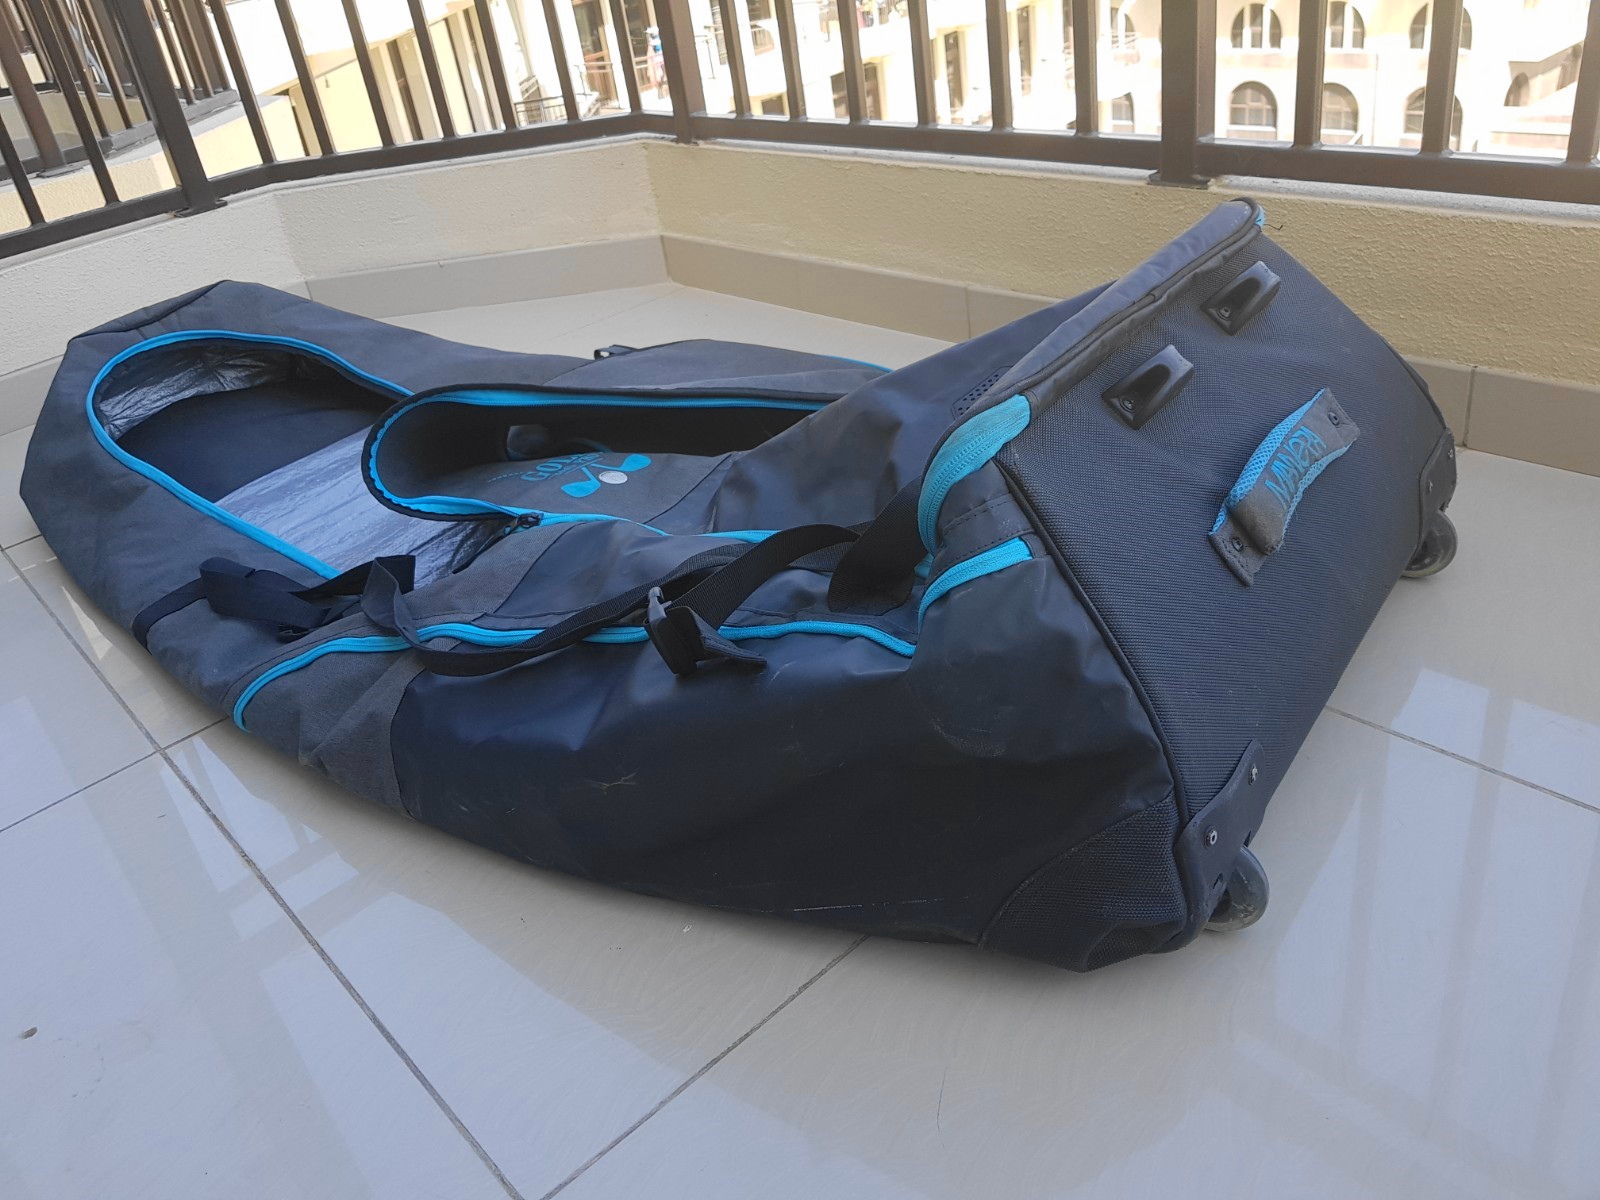 Manera travel kite golf bag in good condition. @ Windcam.com